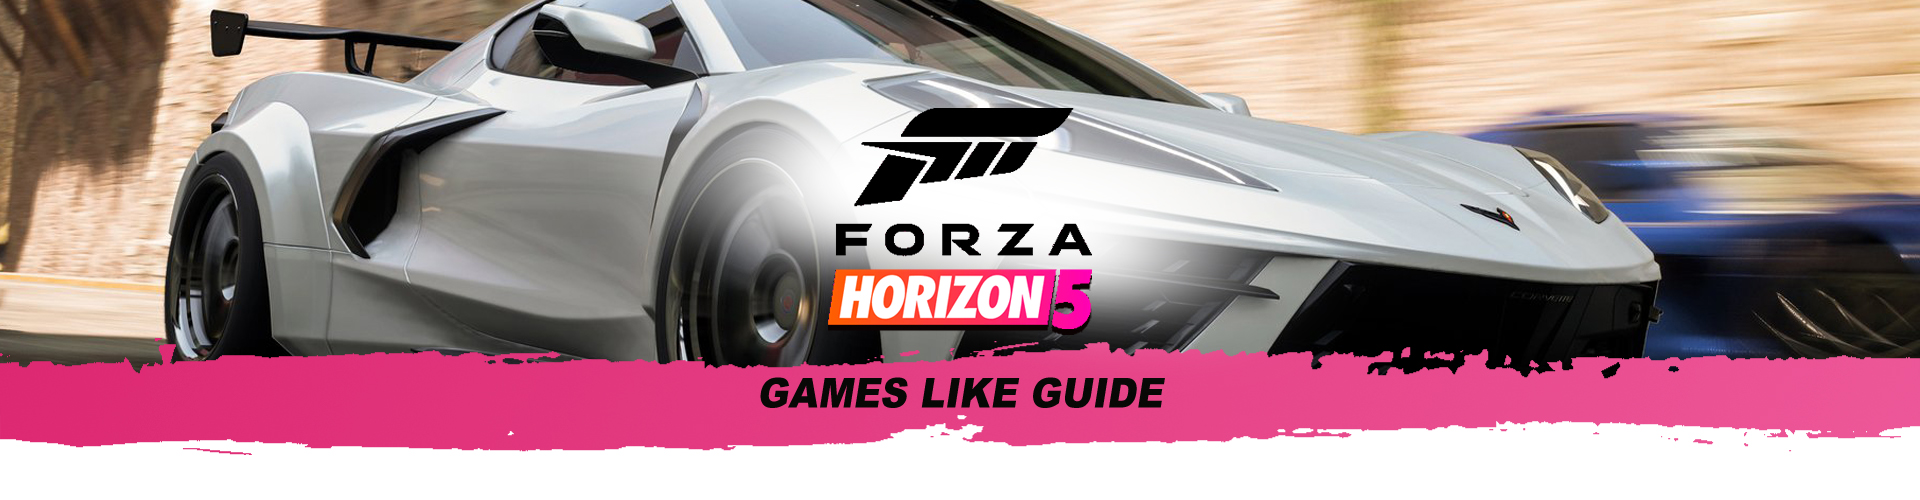 Forza Horizon 5 Games Like Guide